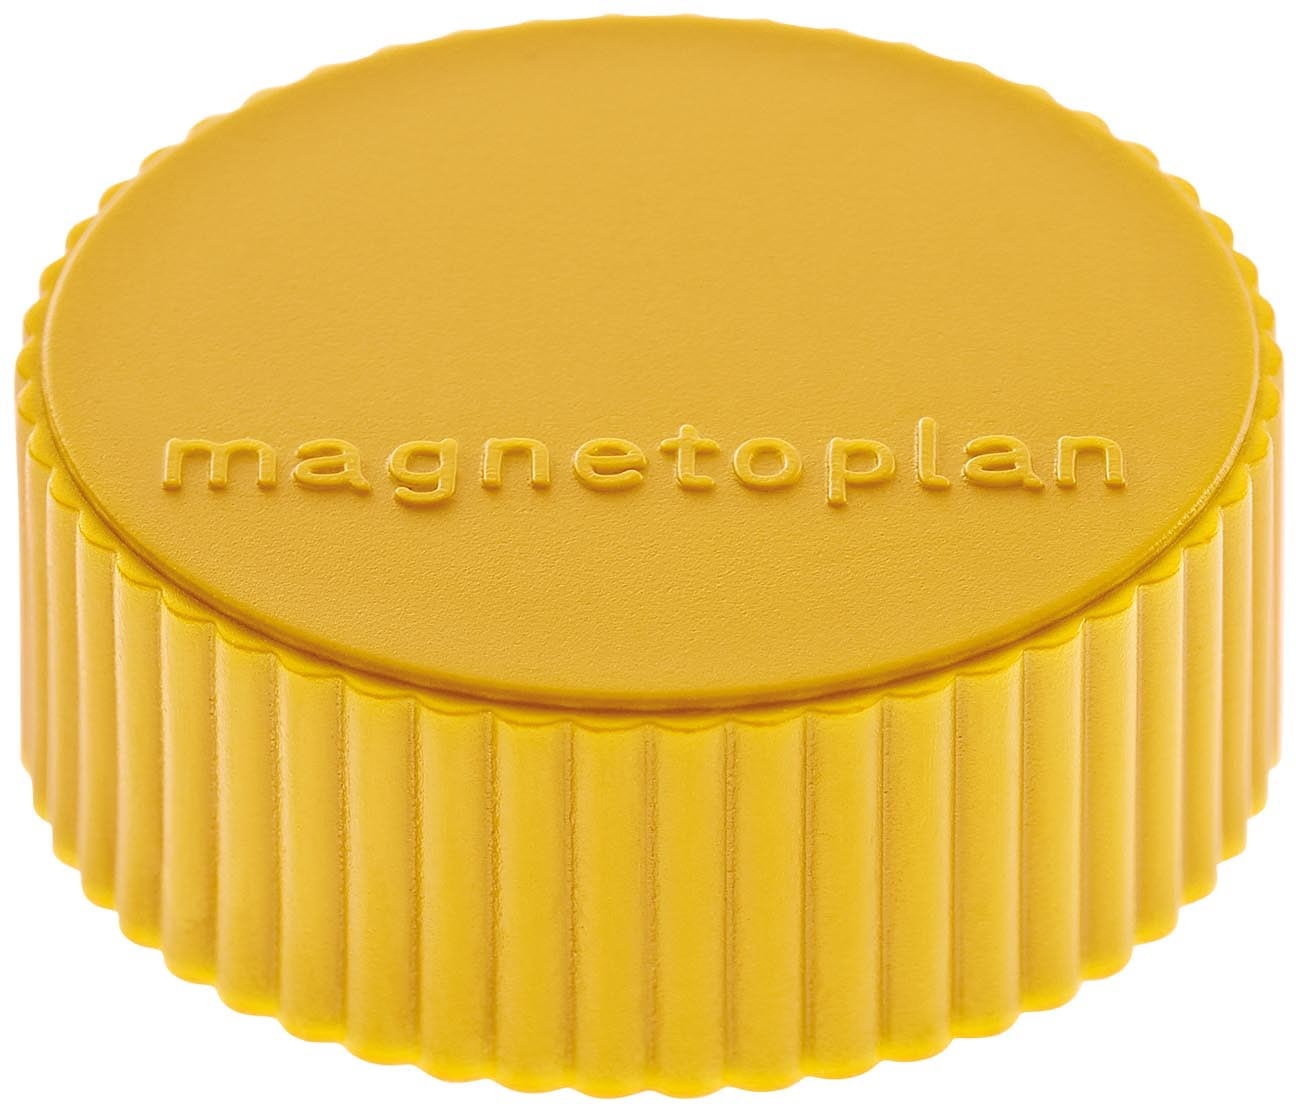 MAGNETOPLAN Aimant Discofix Magnum 34mm 1660002 jaune 10 pcs.